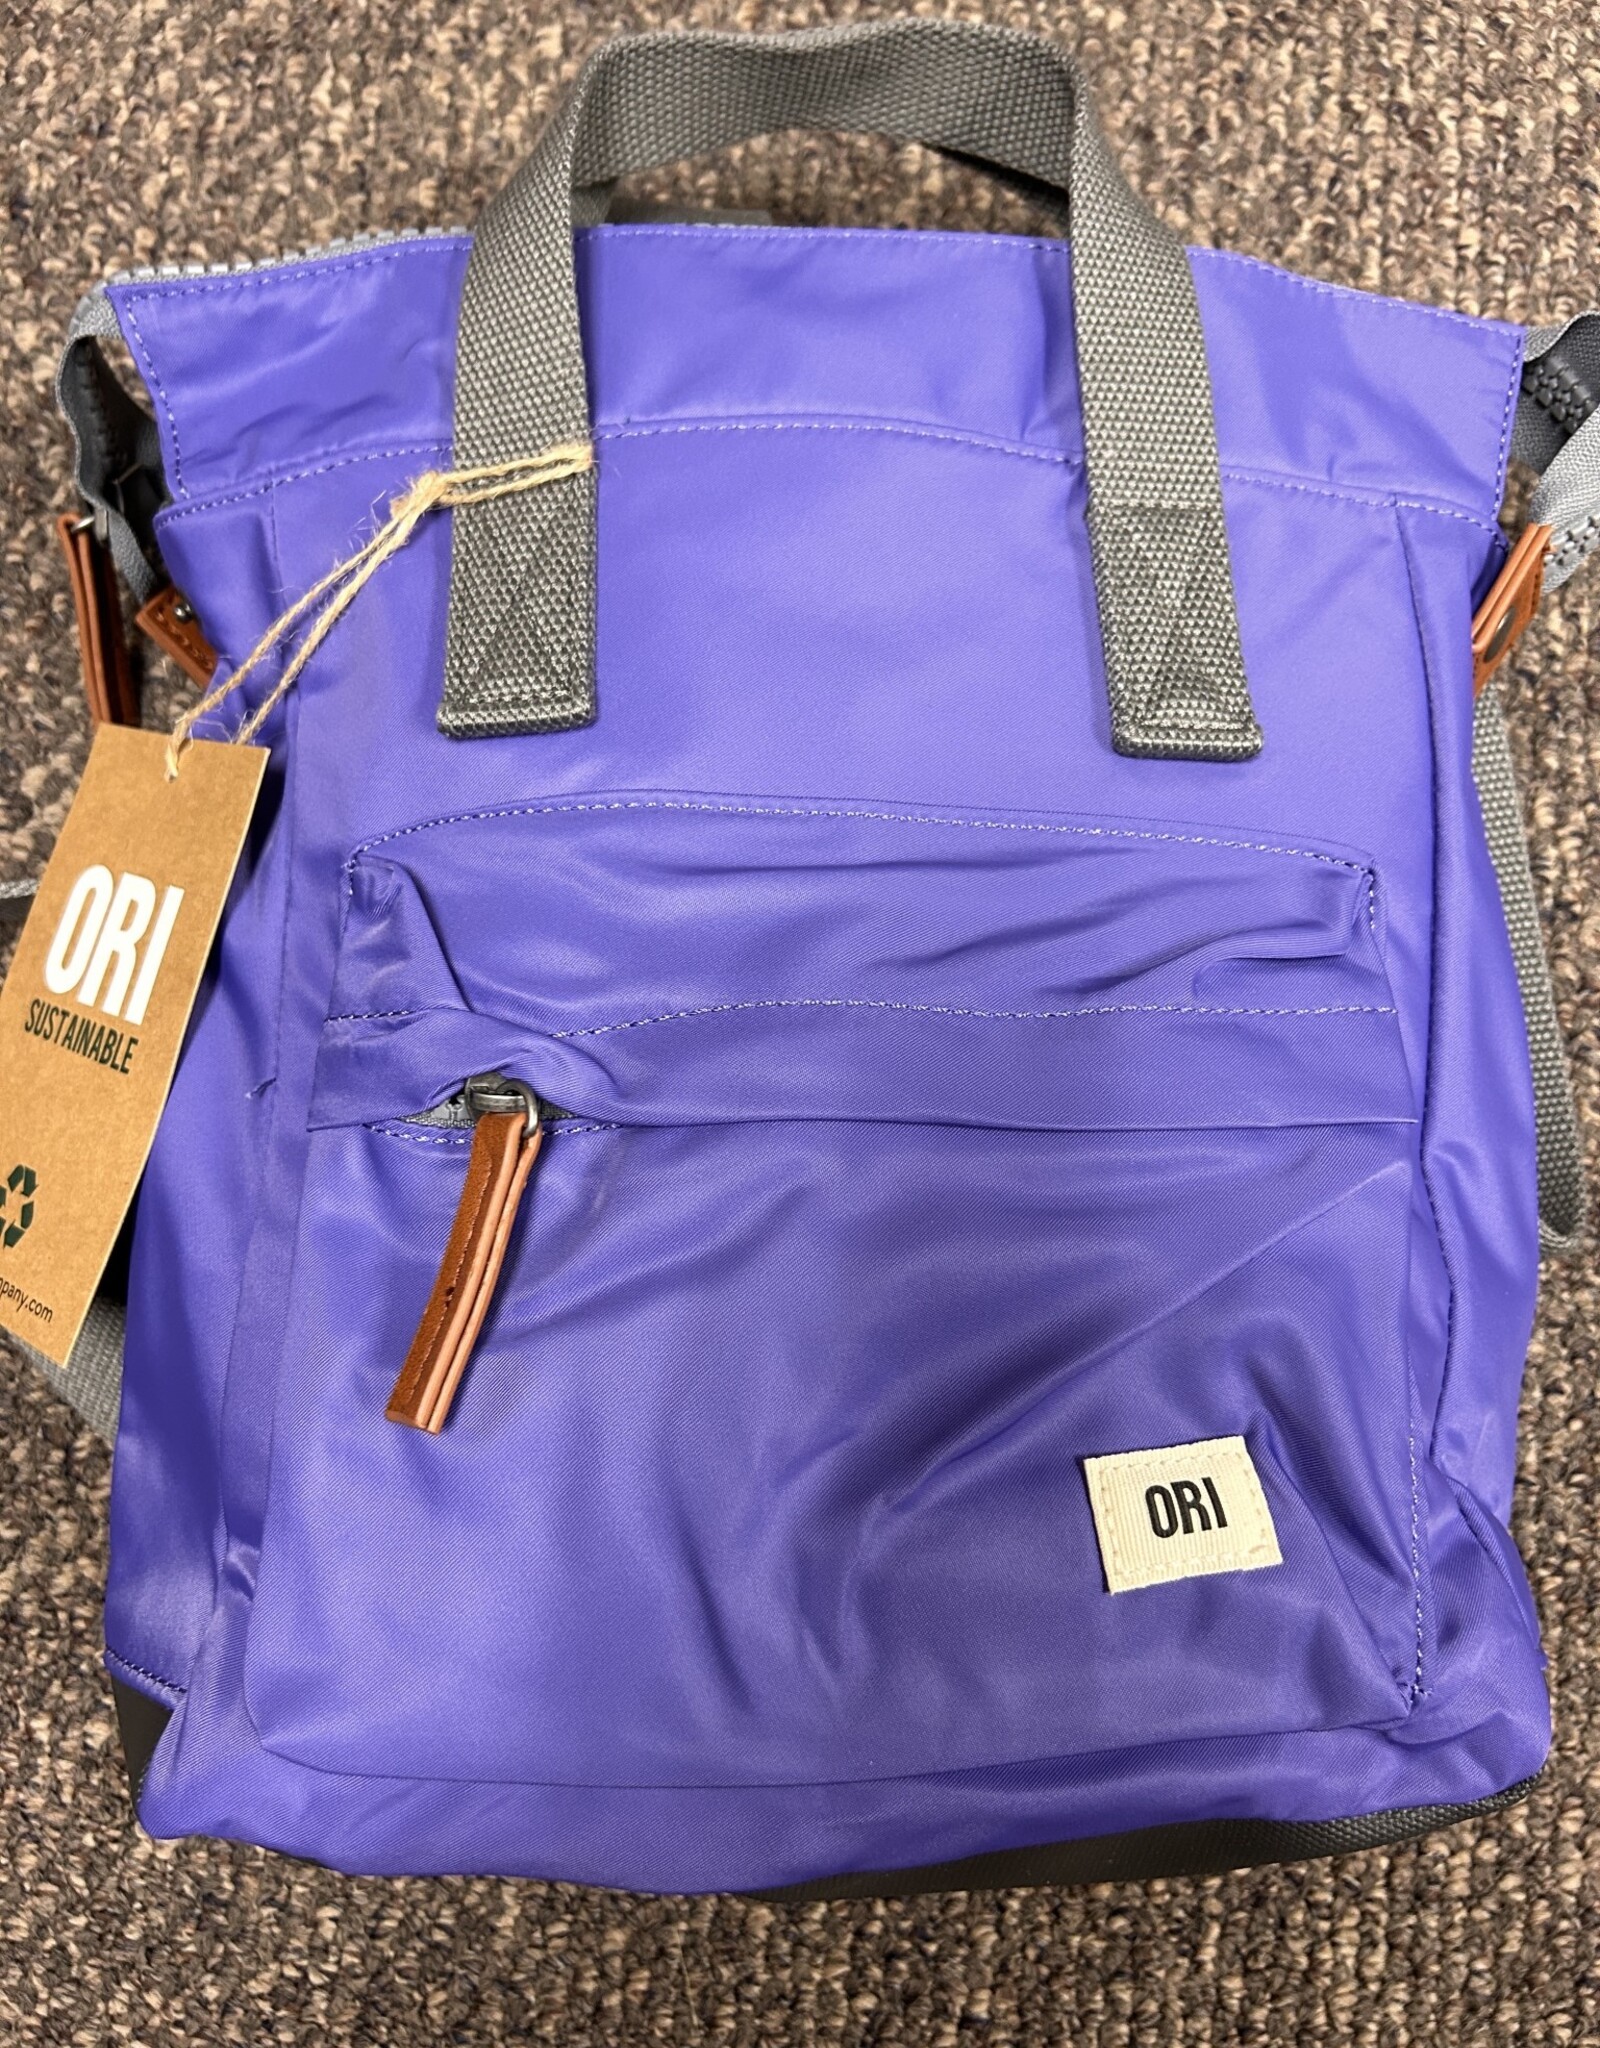 Ori USA Recycled Nylon Backpack